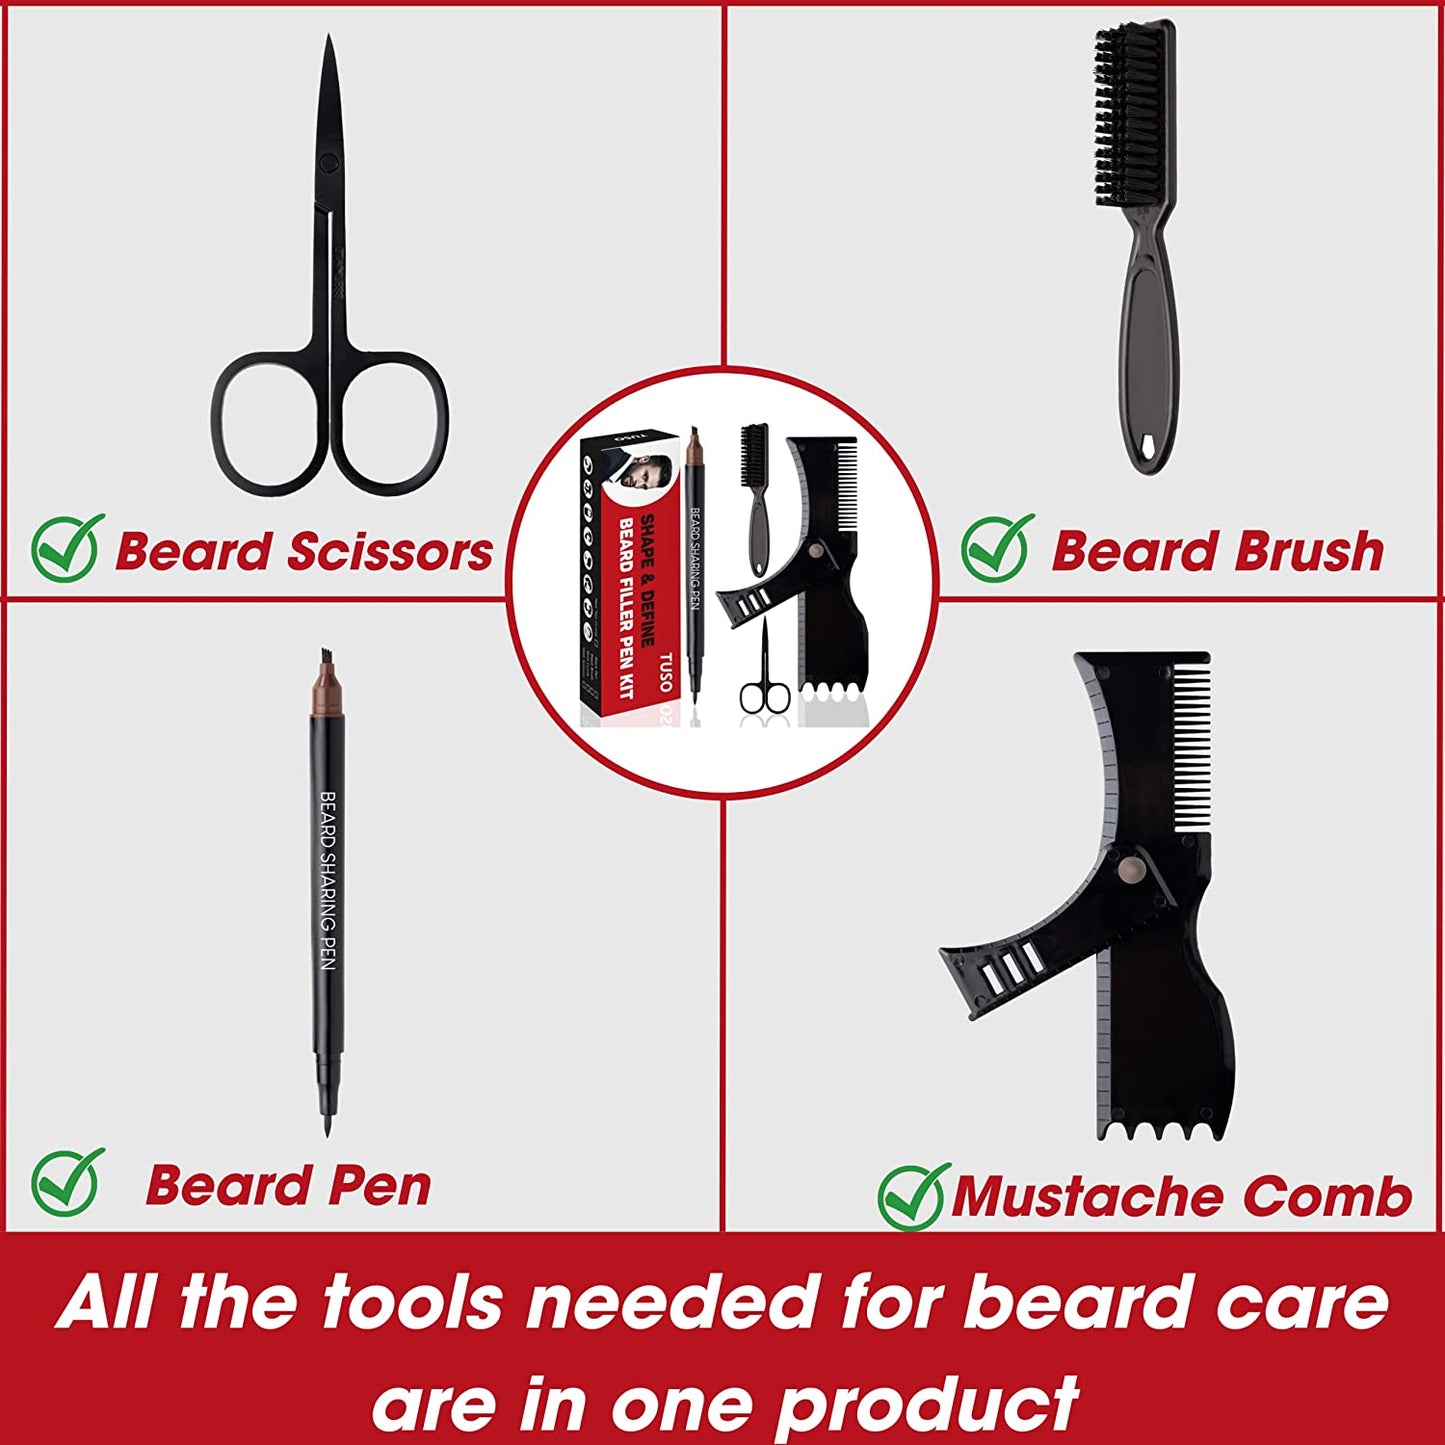 Beard Pencil Filler For Men - Beard Filler Pen Kit 2 Nibs Beard Kit With Beard Pen, Mustache Comb, Beard Scissors and Beard Brush - Beard Care At Home, Natural Look for Beard, Beard care kit for men.